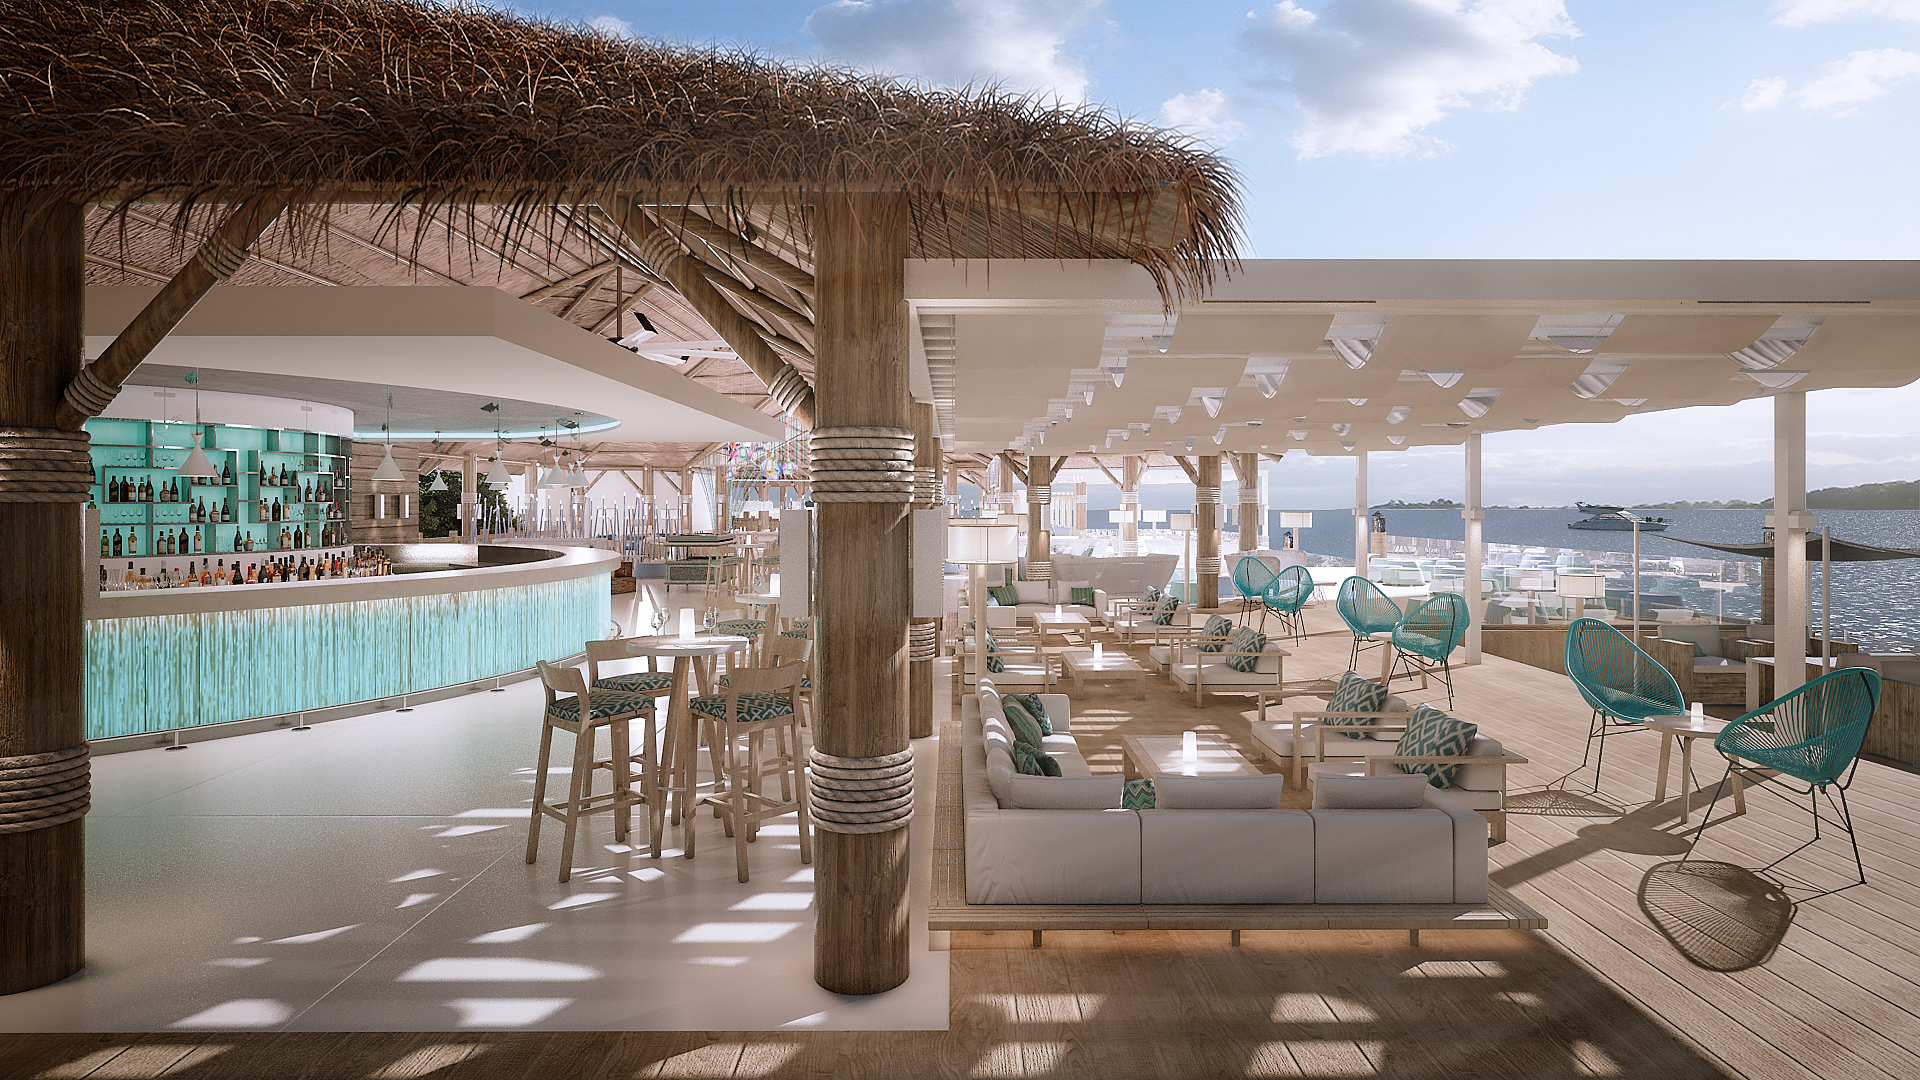 Indigo Beach Lounge | Club Med - Punta Cana on Behance